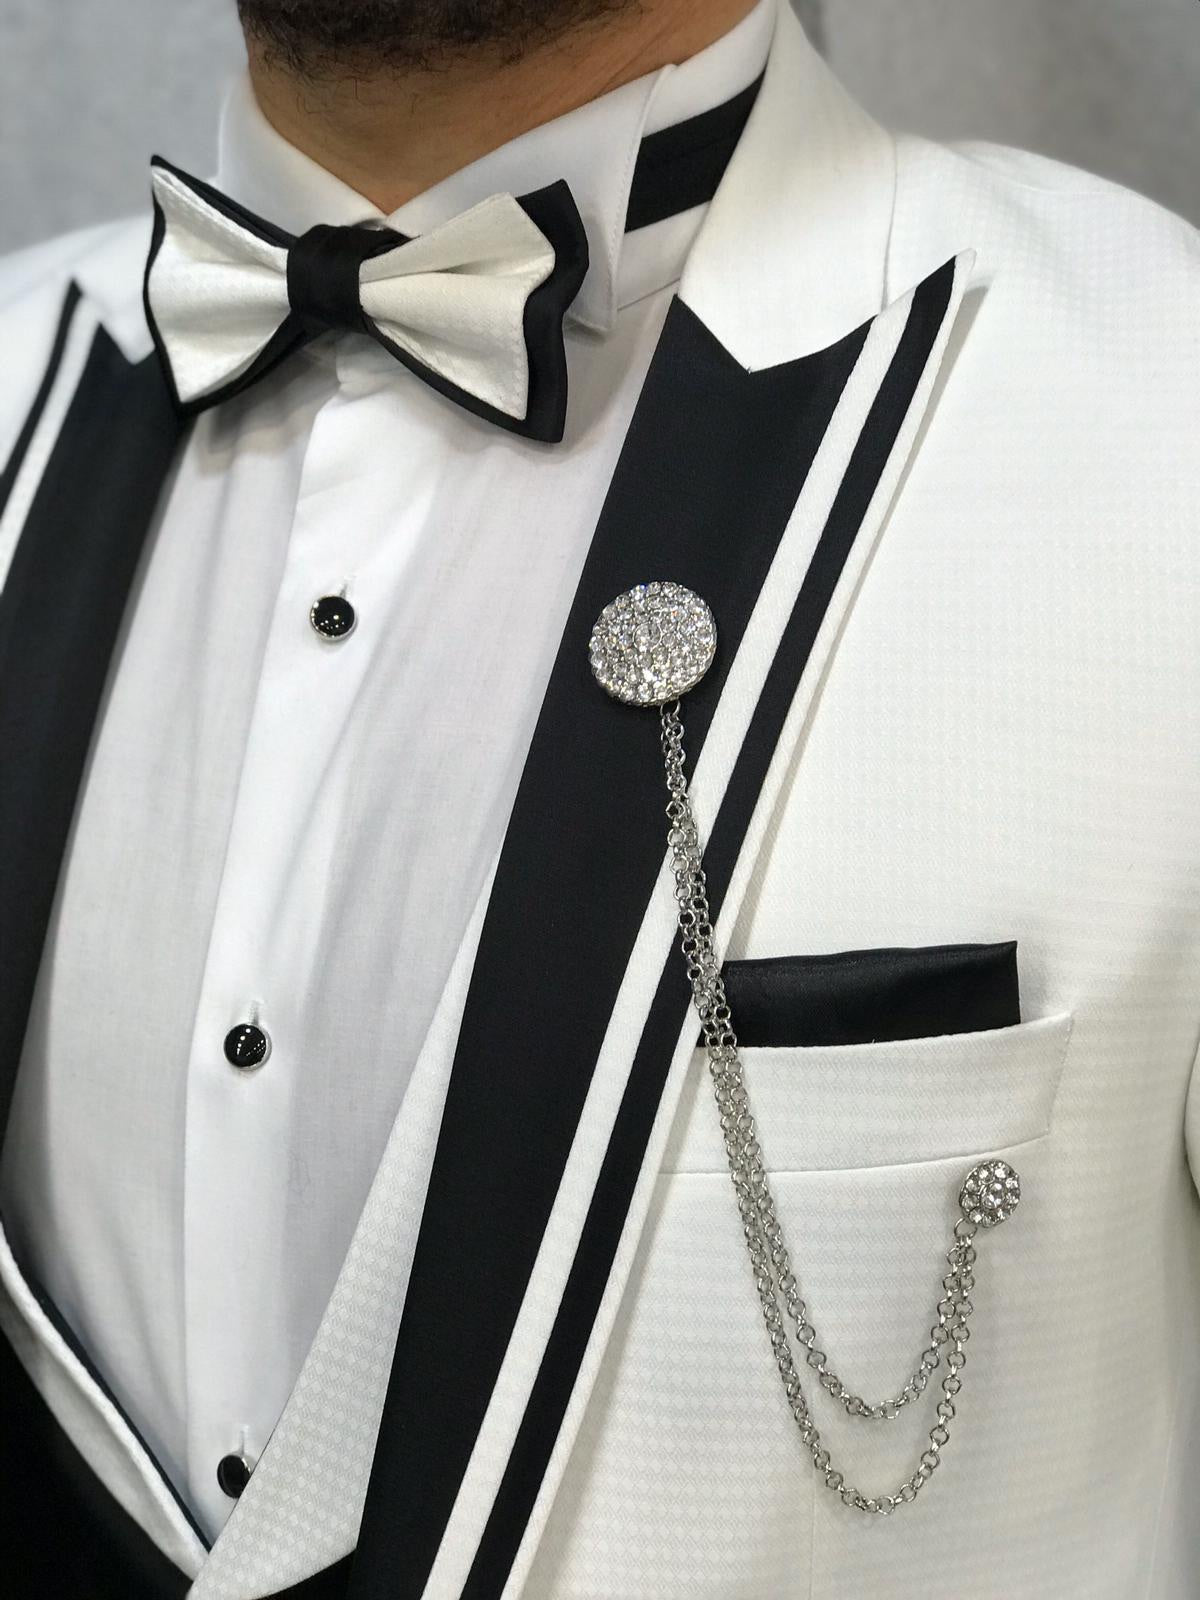 Infinite White Tuxedo with Black Vest